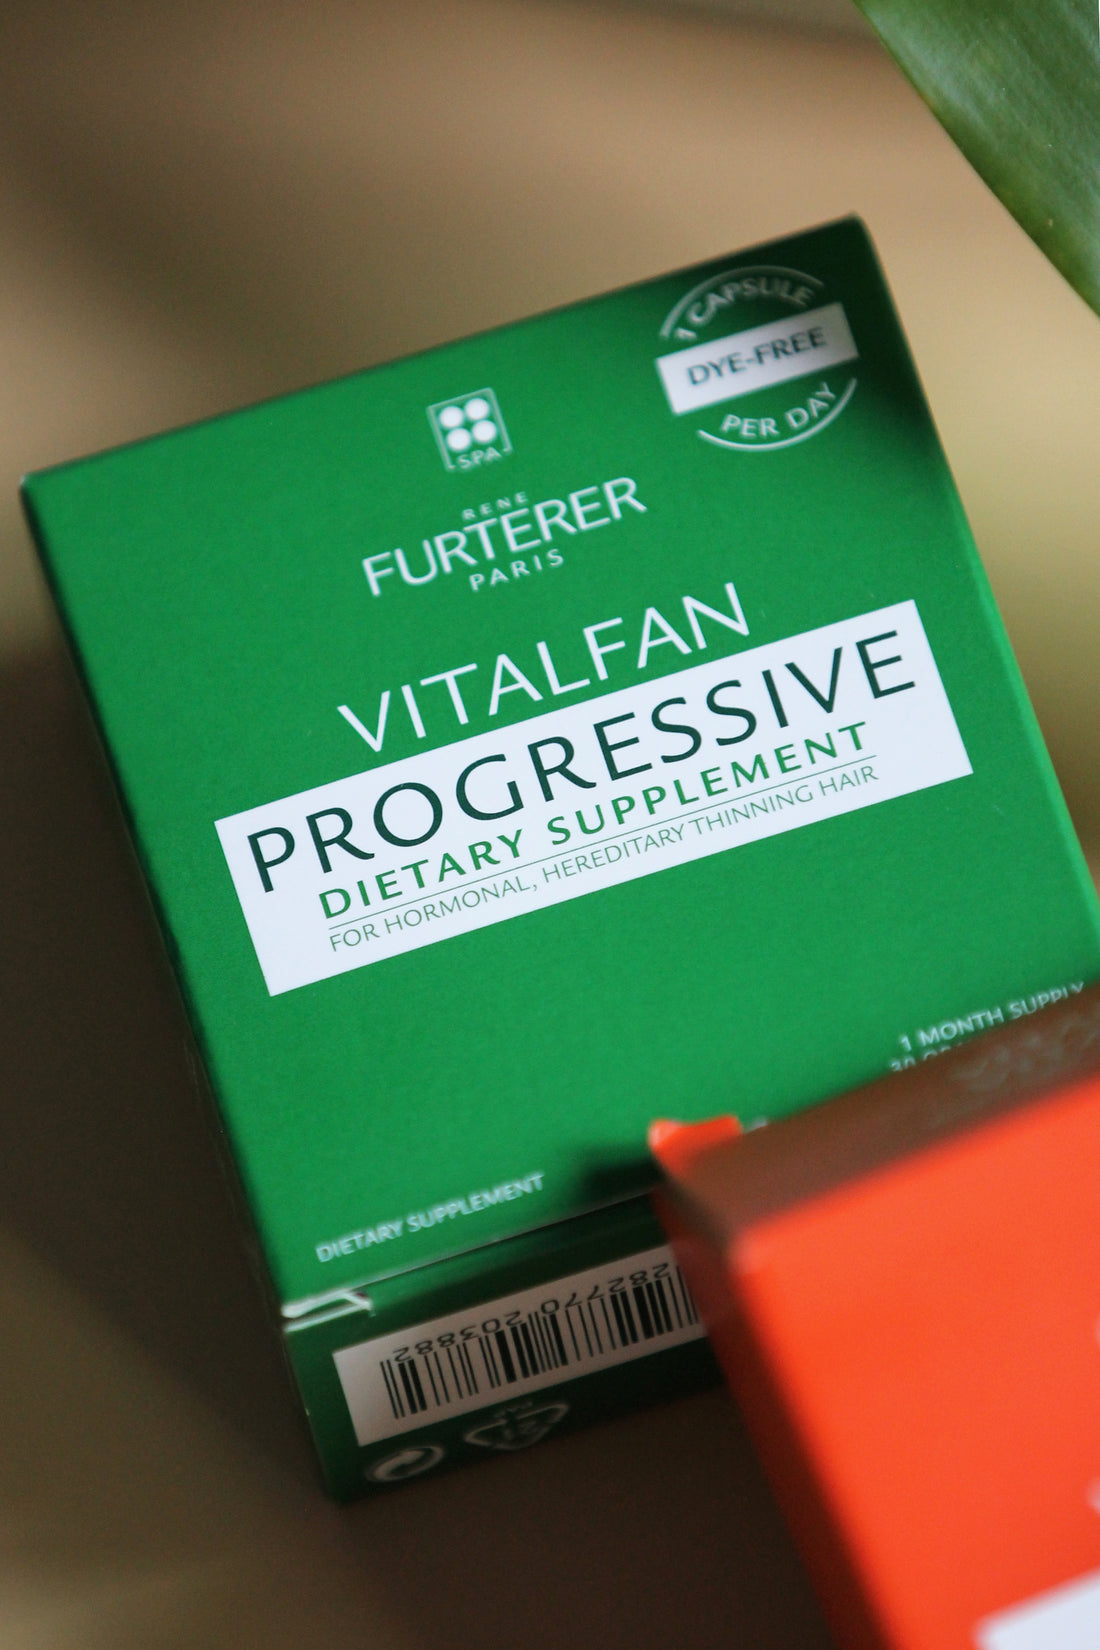 Vitalfan Progressive Dietary Supplement